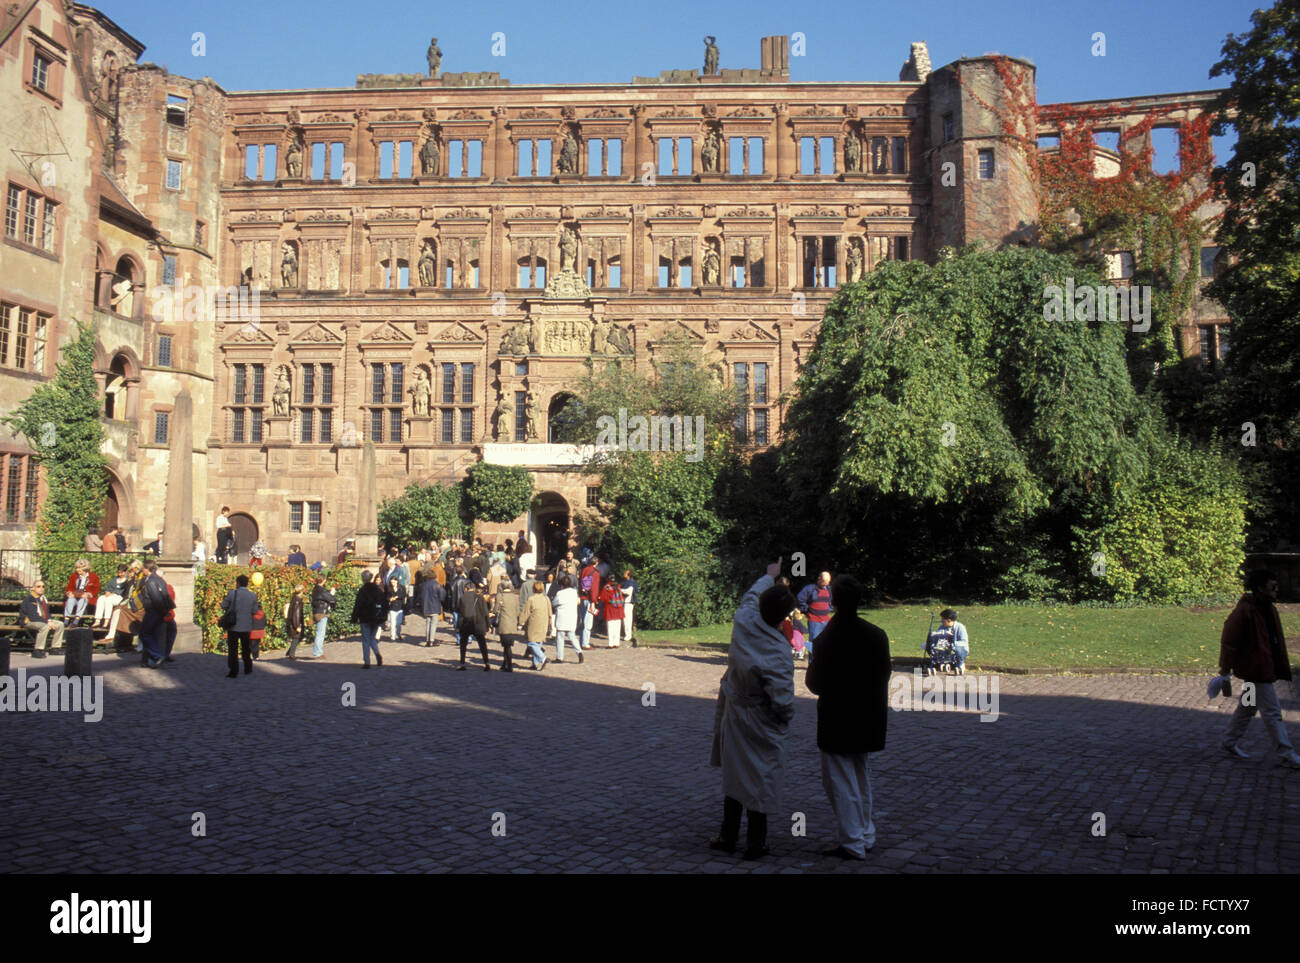 DEU, Germania, Heidelberg, facciata del castello. DEU, Deutschland, Heidelberg, Das Schloss. Foto Stock